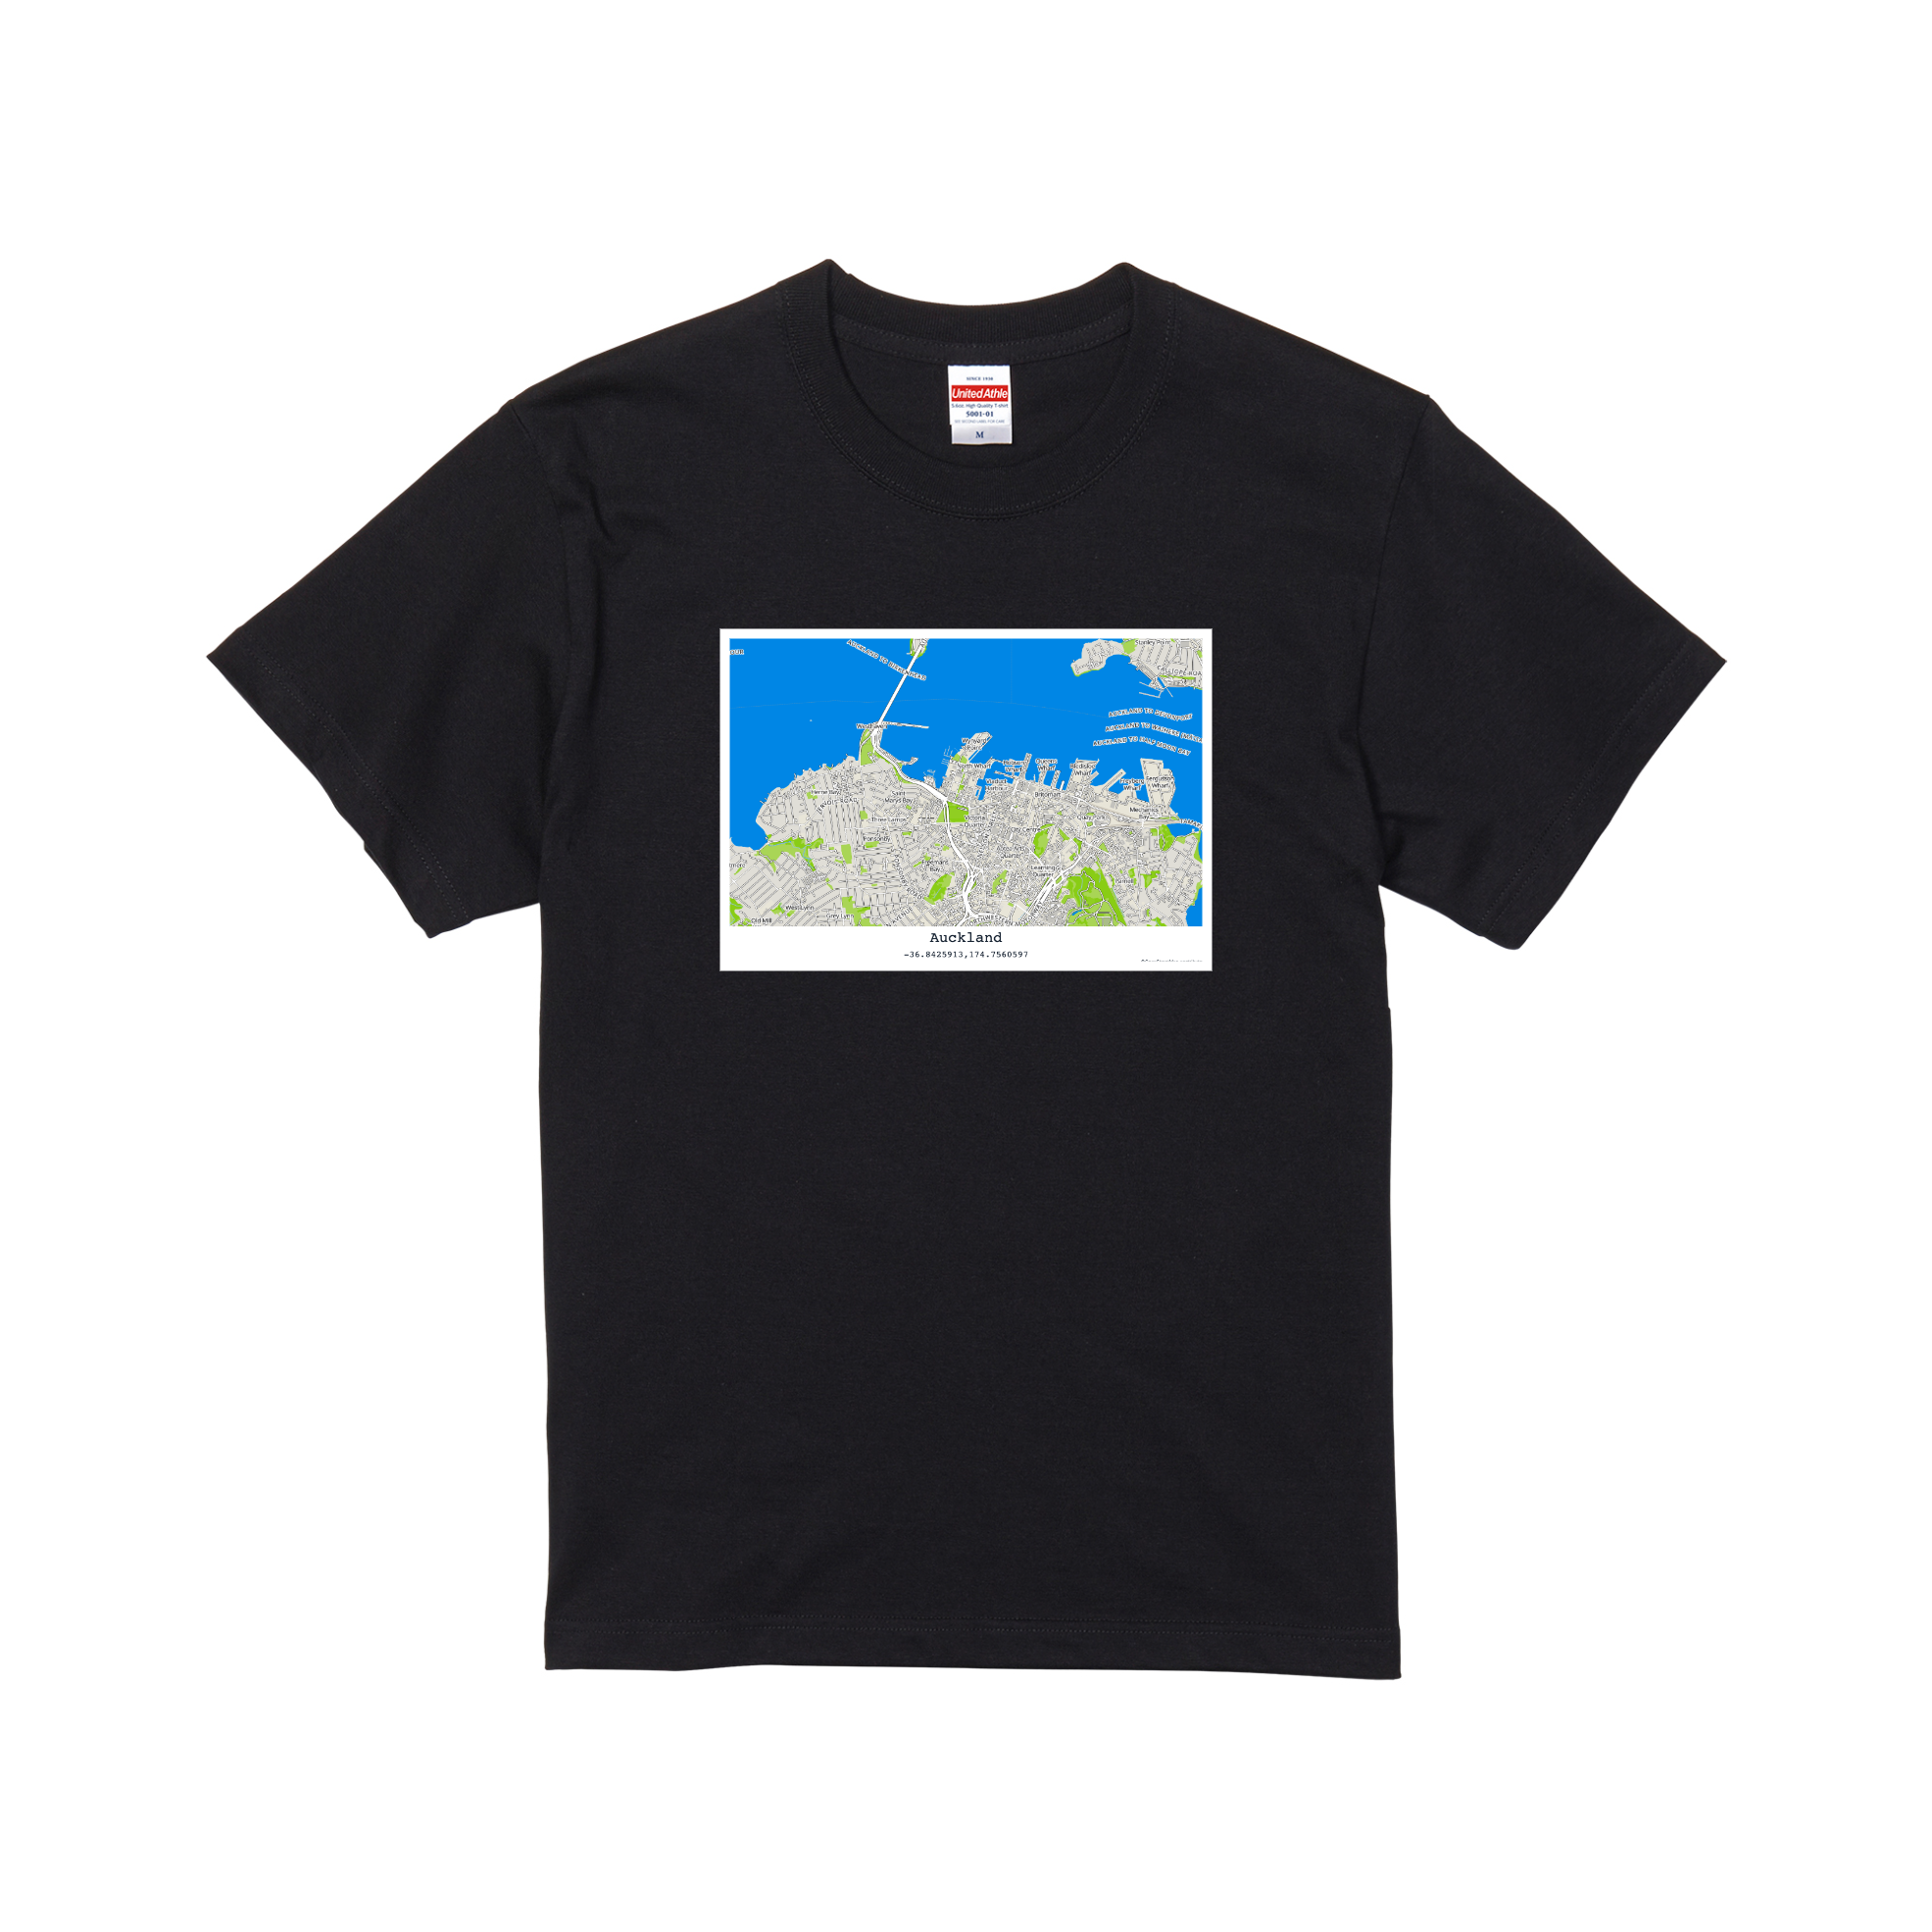 Auckland City Map T-shirt